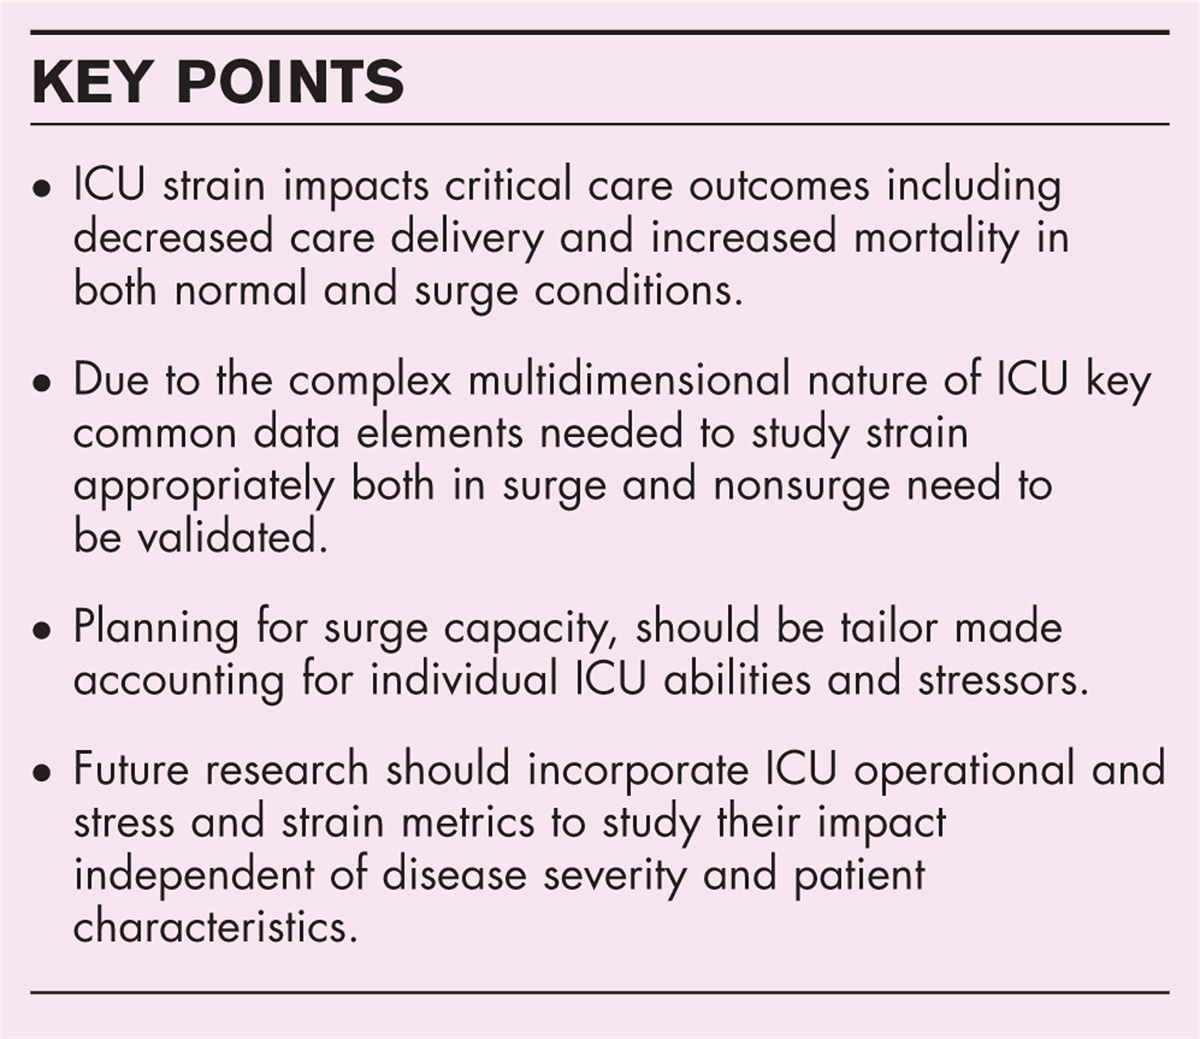 Impact of ICU strain on outcomes